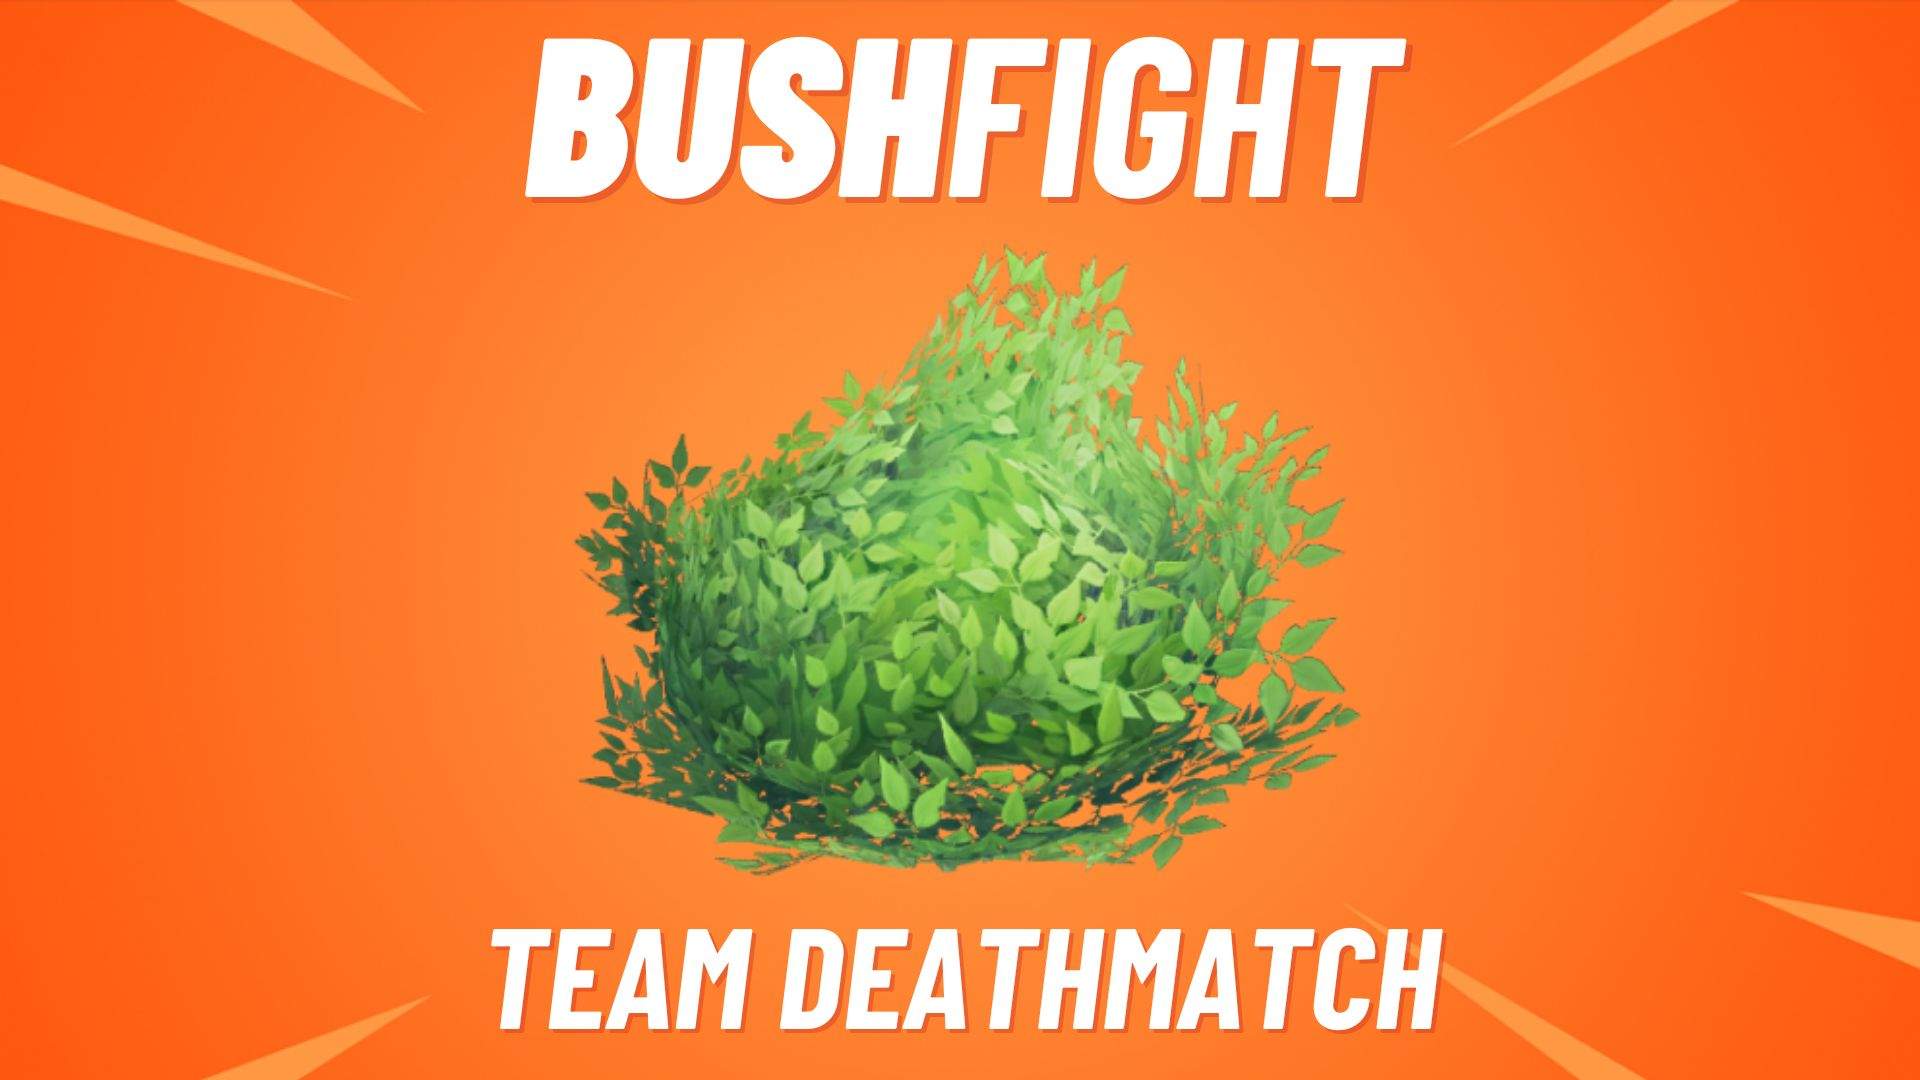 BUSH FIGHT - Deathmatch (Shotguns Only)